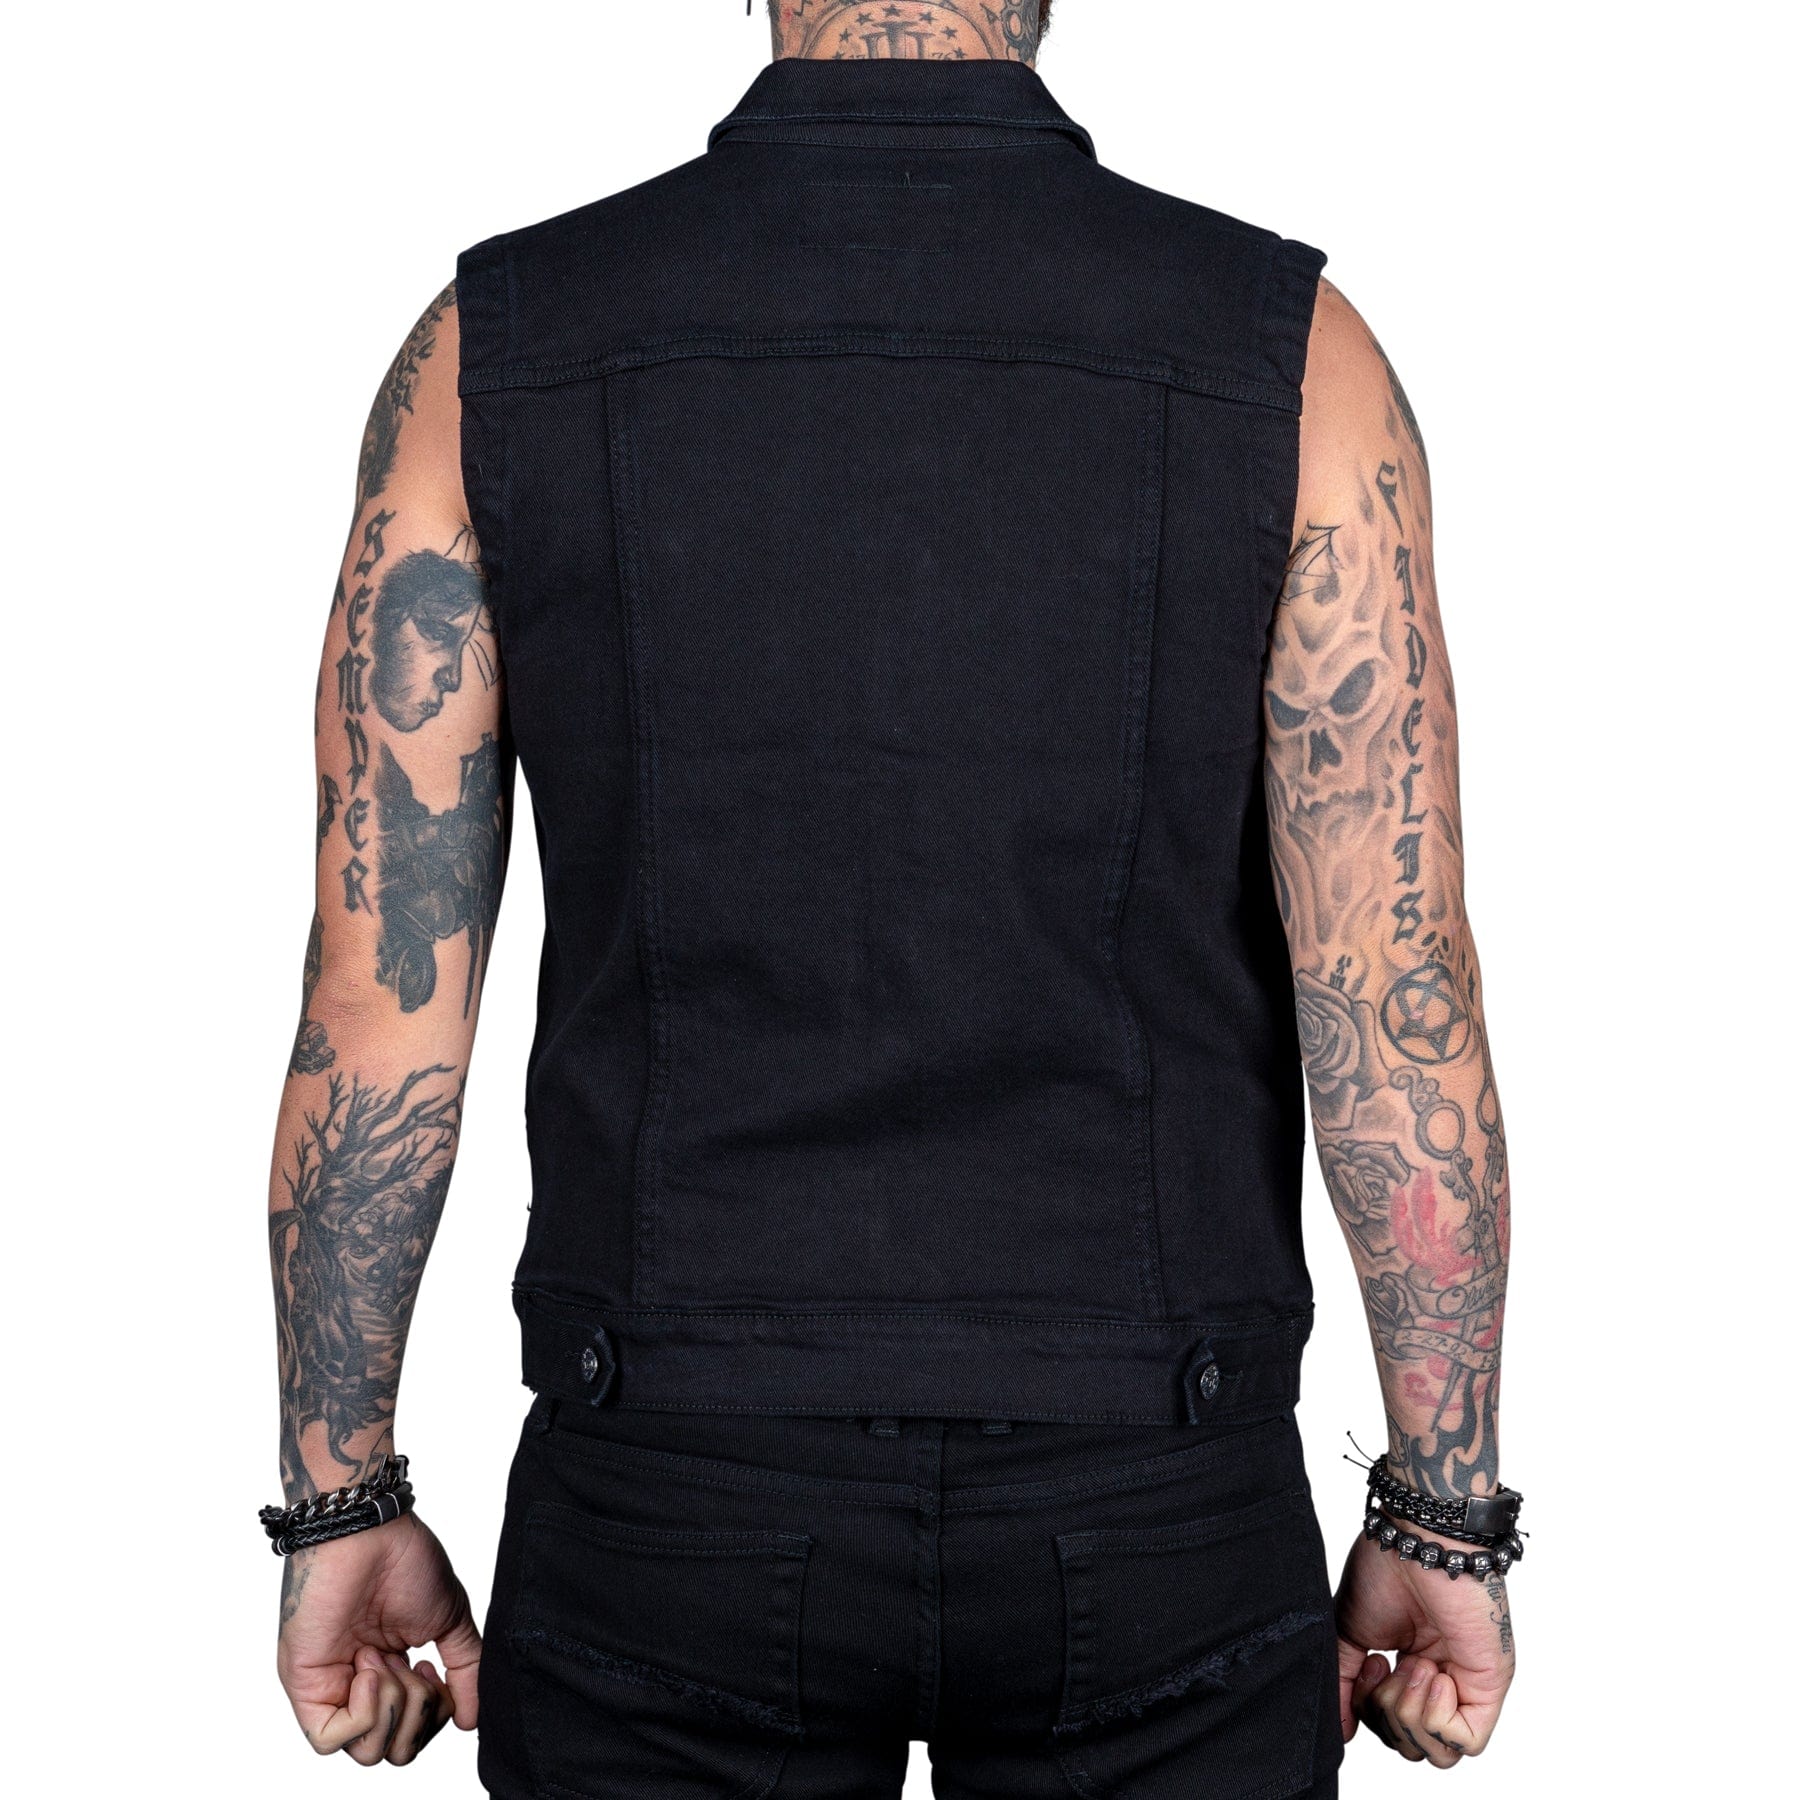 Essentials Collection Jacket Idolmaker Vest - Black